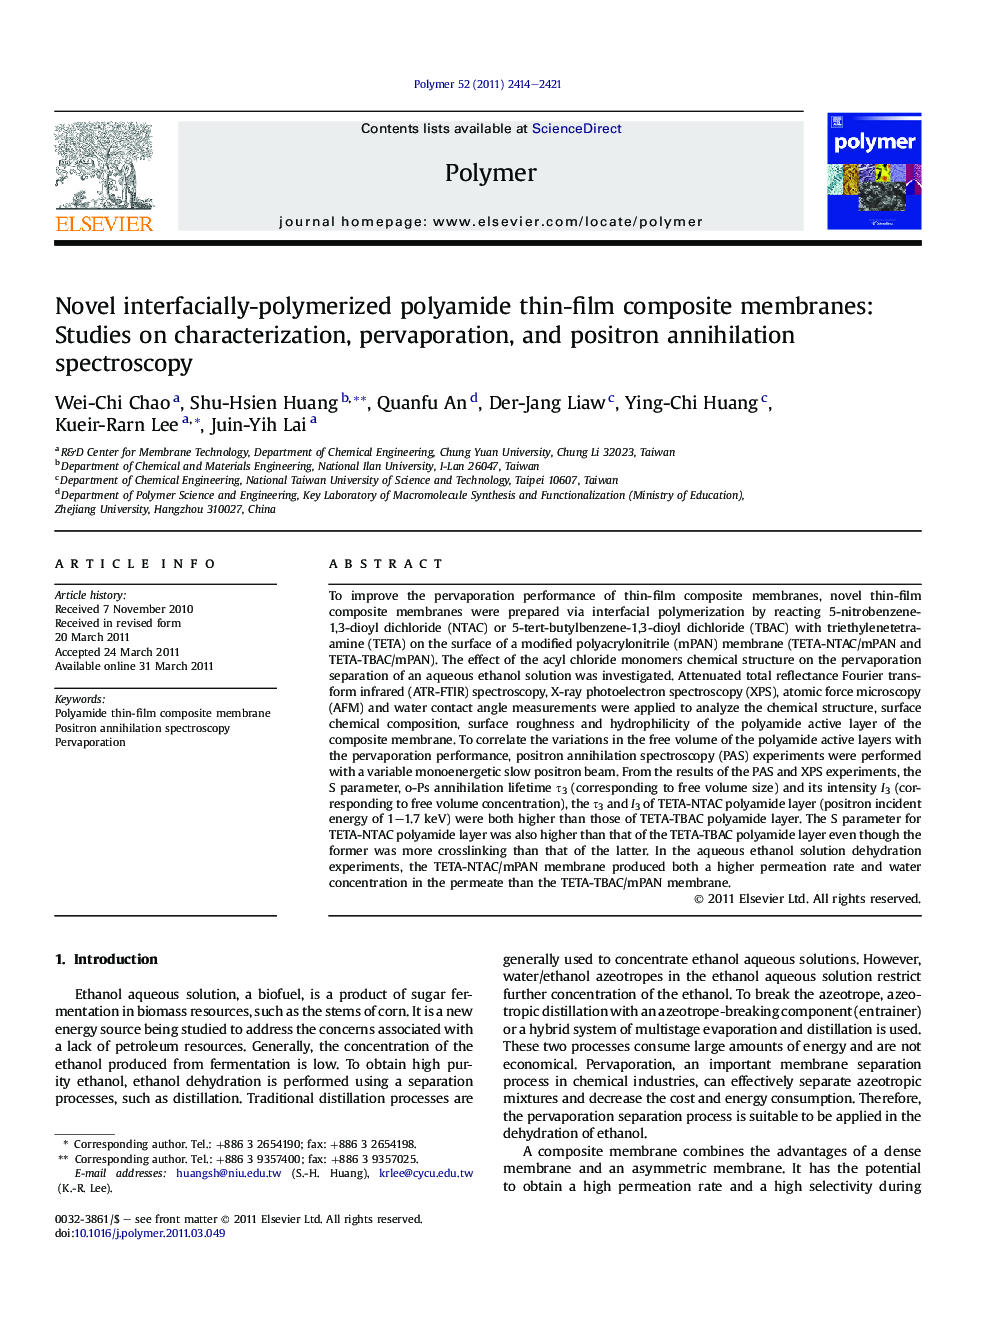 Novel interfacially-polymerized polyamide thin-film composite membranes: Studies on characterization, pervaporation, and positron annihilation spectroscopy